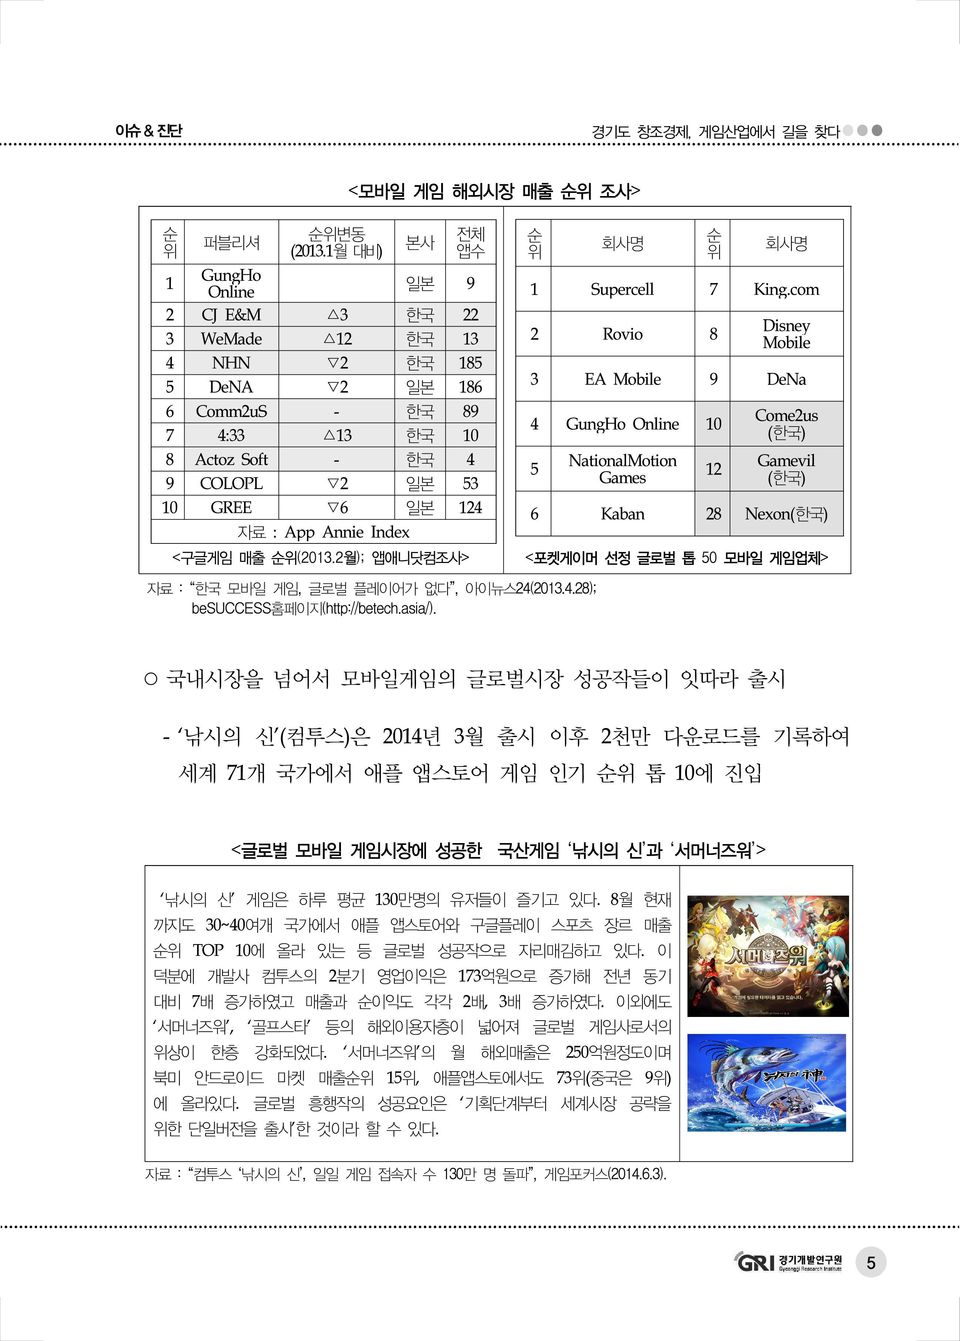 Annie Index <구글게임 매출 순위(2013.2월); 앱애니닷컴조사> 순 위 회사명 순 위 회사명 1 Supercell 7 King.